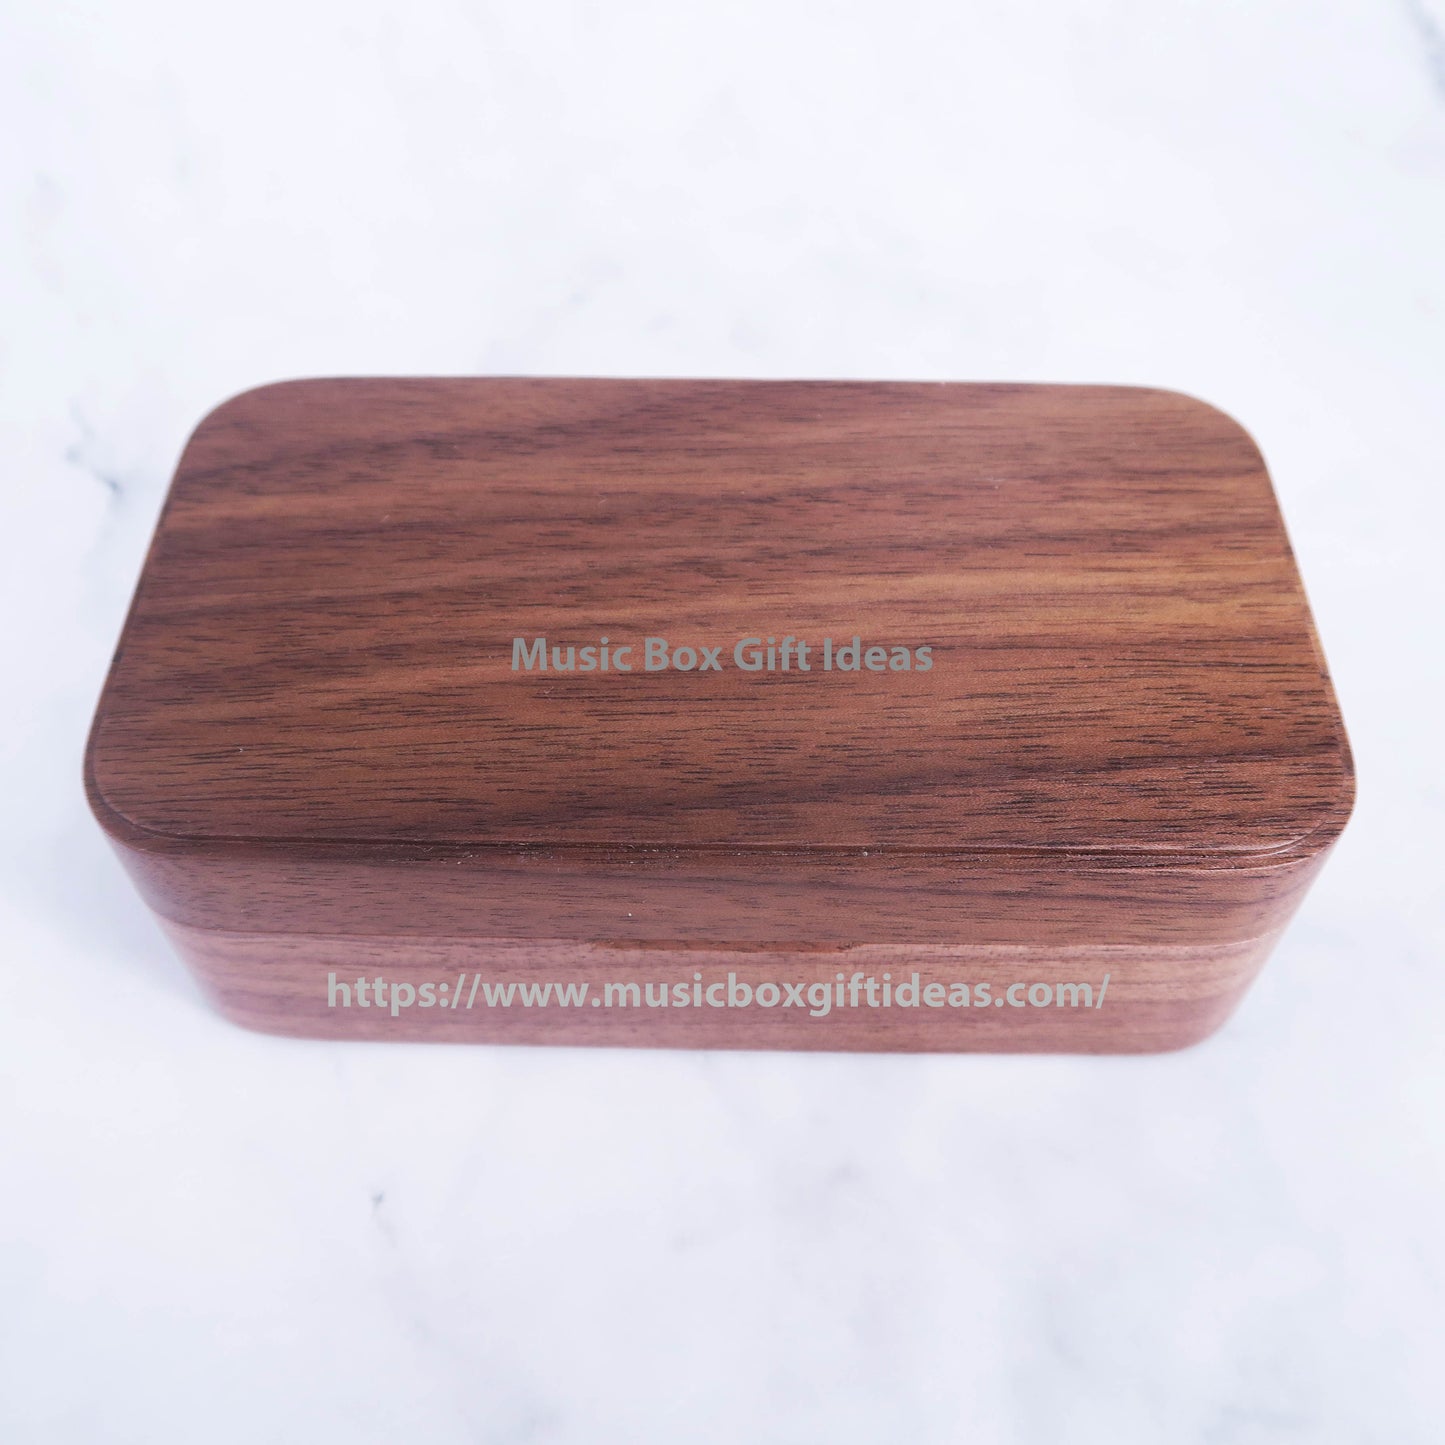 Disney Mulan Reflection 18-Note Jewelry Music Box Gift (Wooden Clockwork) - Music Box Gift Ideas